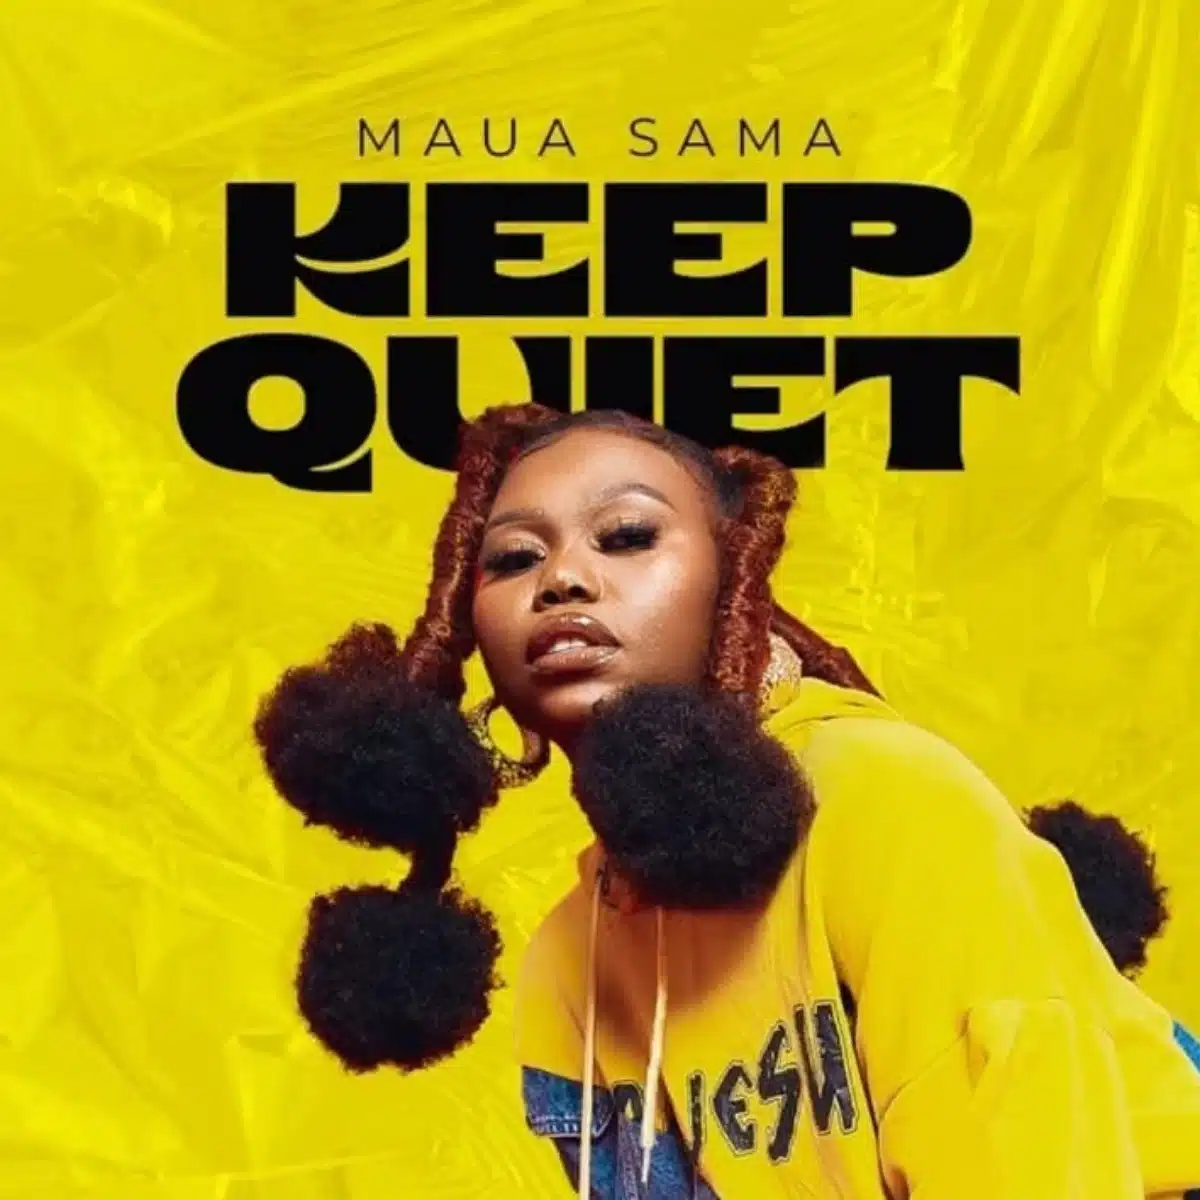 DOWNLOAD: Maua Sama – “Keep Quiet” Mp3